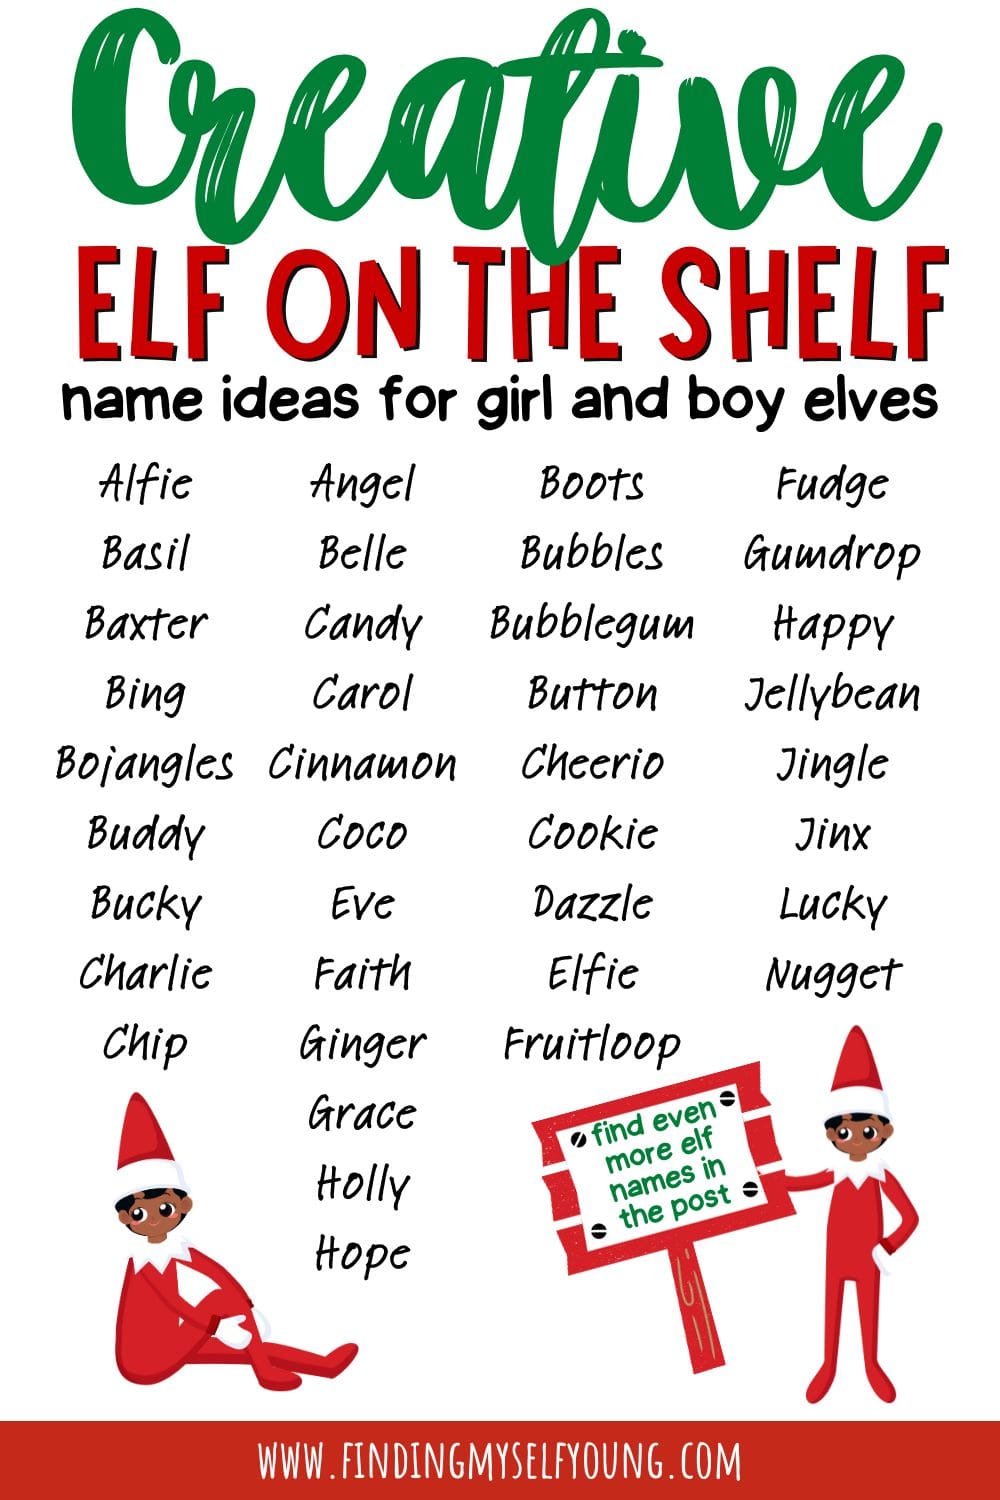 creative elf on the shelf name ideas for boy and girl elves.